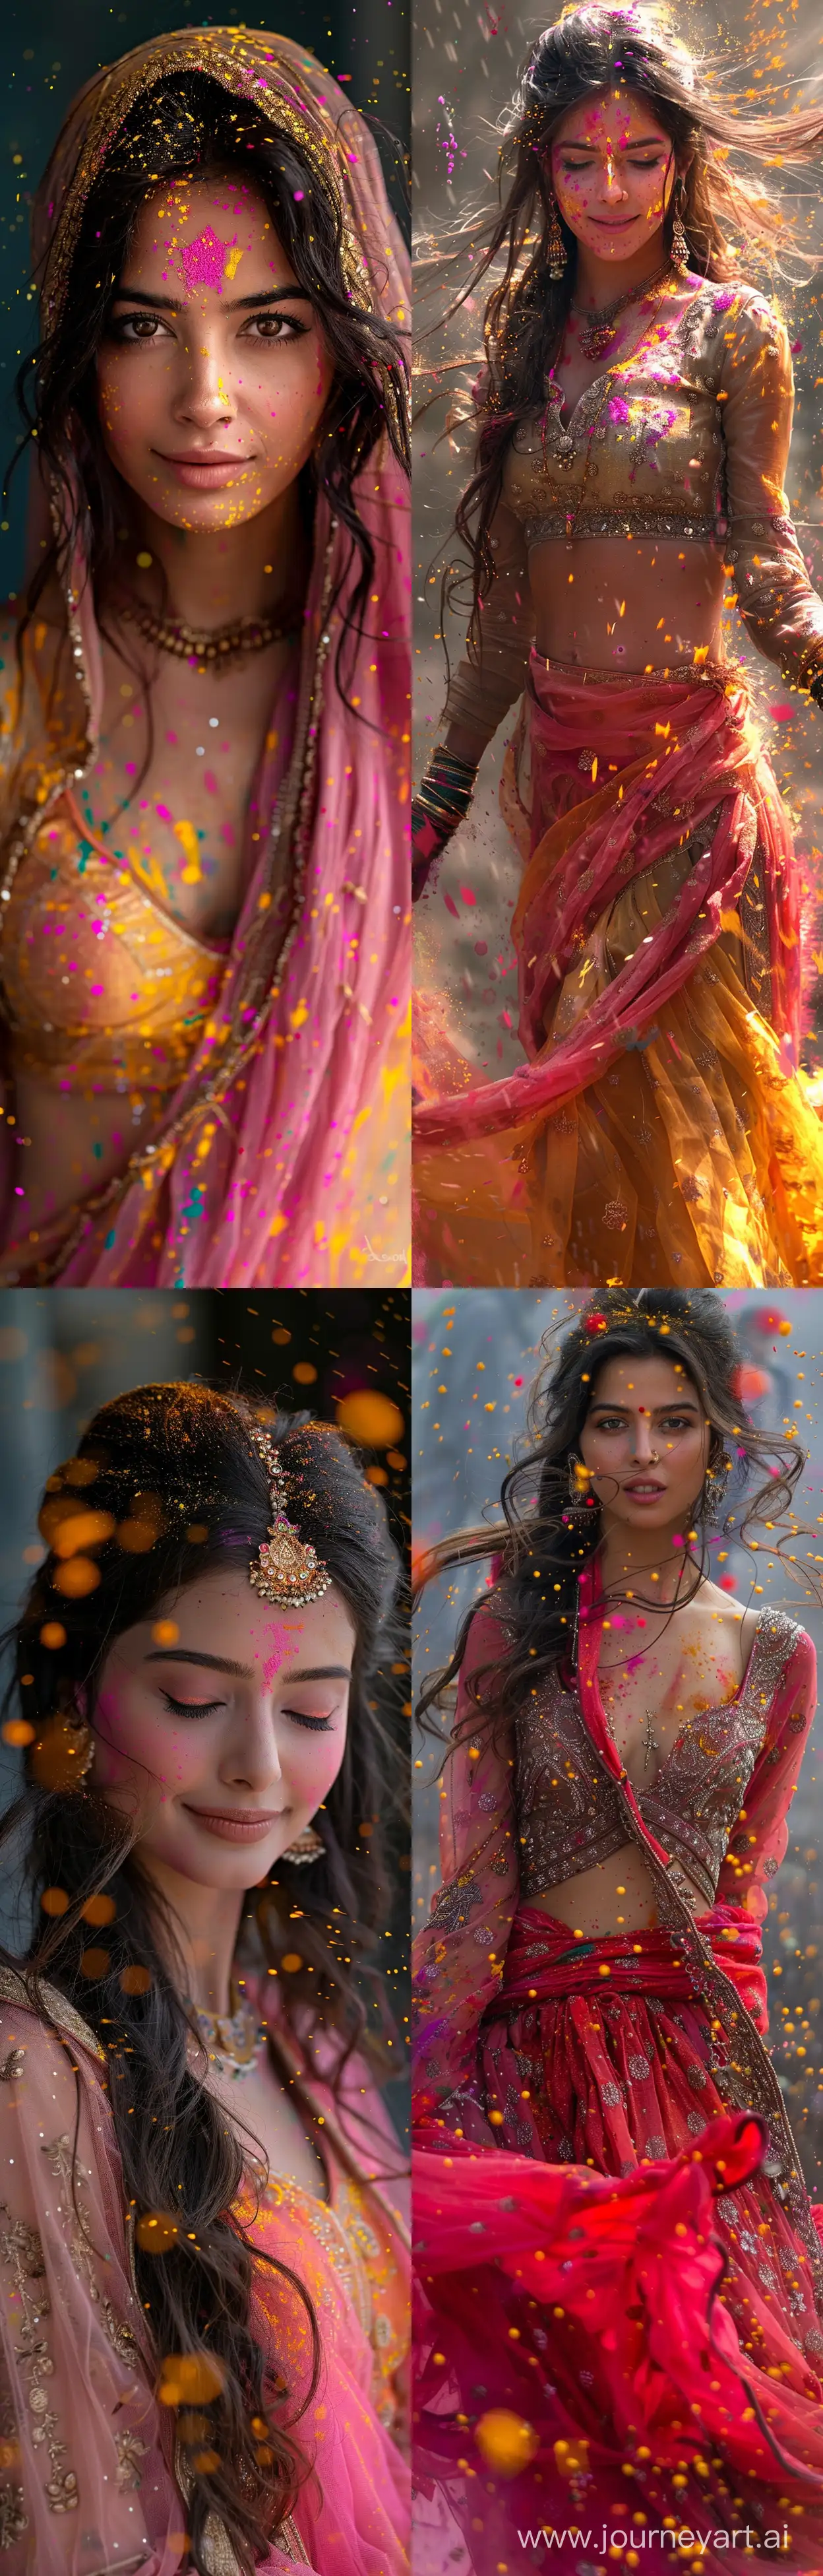 Vibrant-Holi-Celebration-Punjabi-Woman-Dancing-in-Colorful-Paints